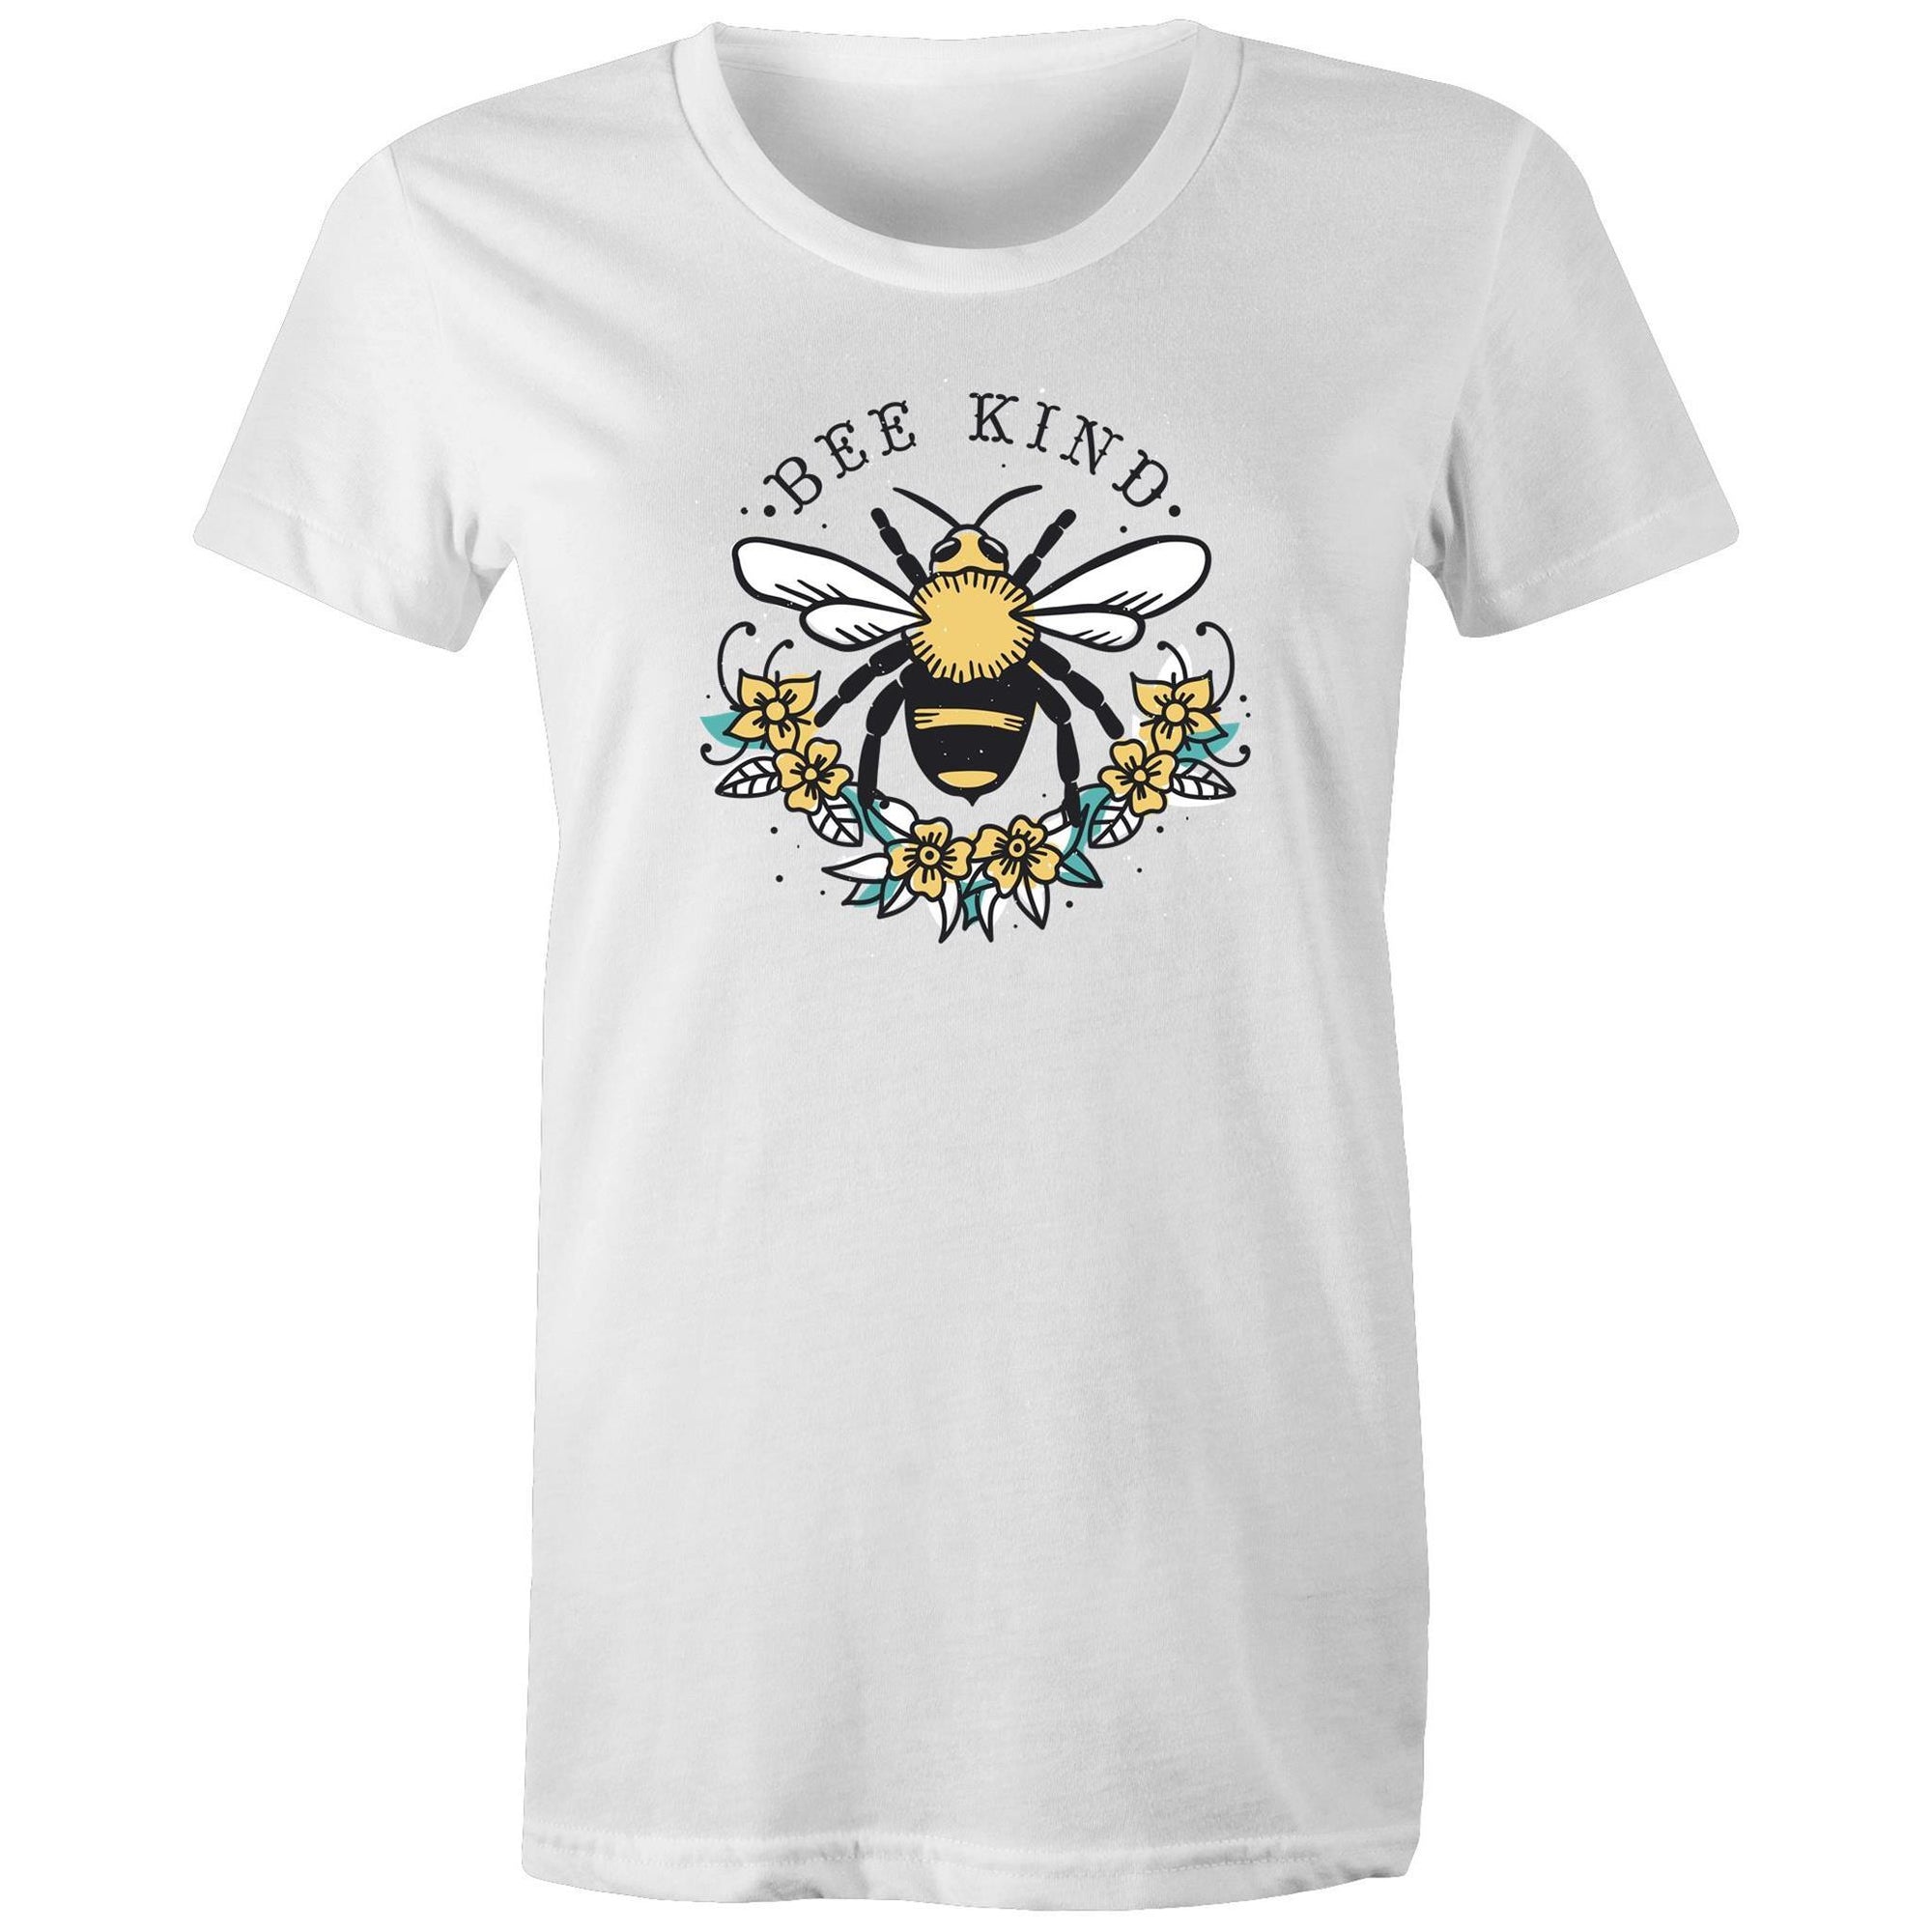 Women's Bee Kind T-shirt